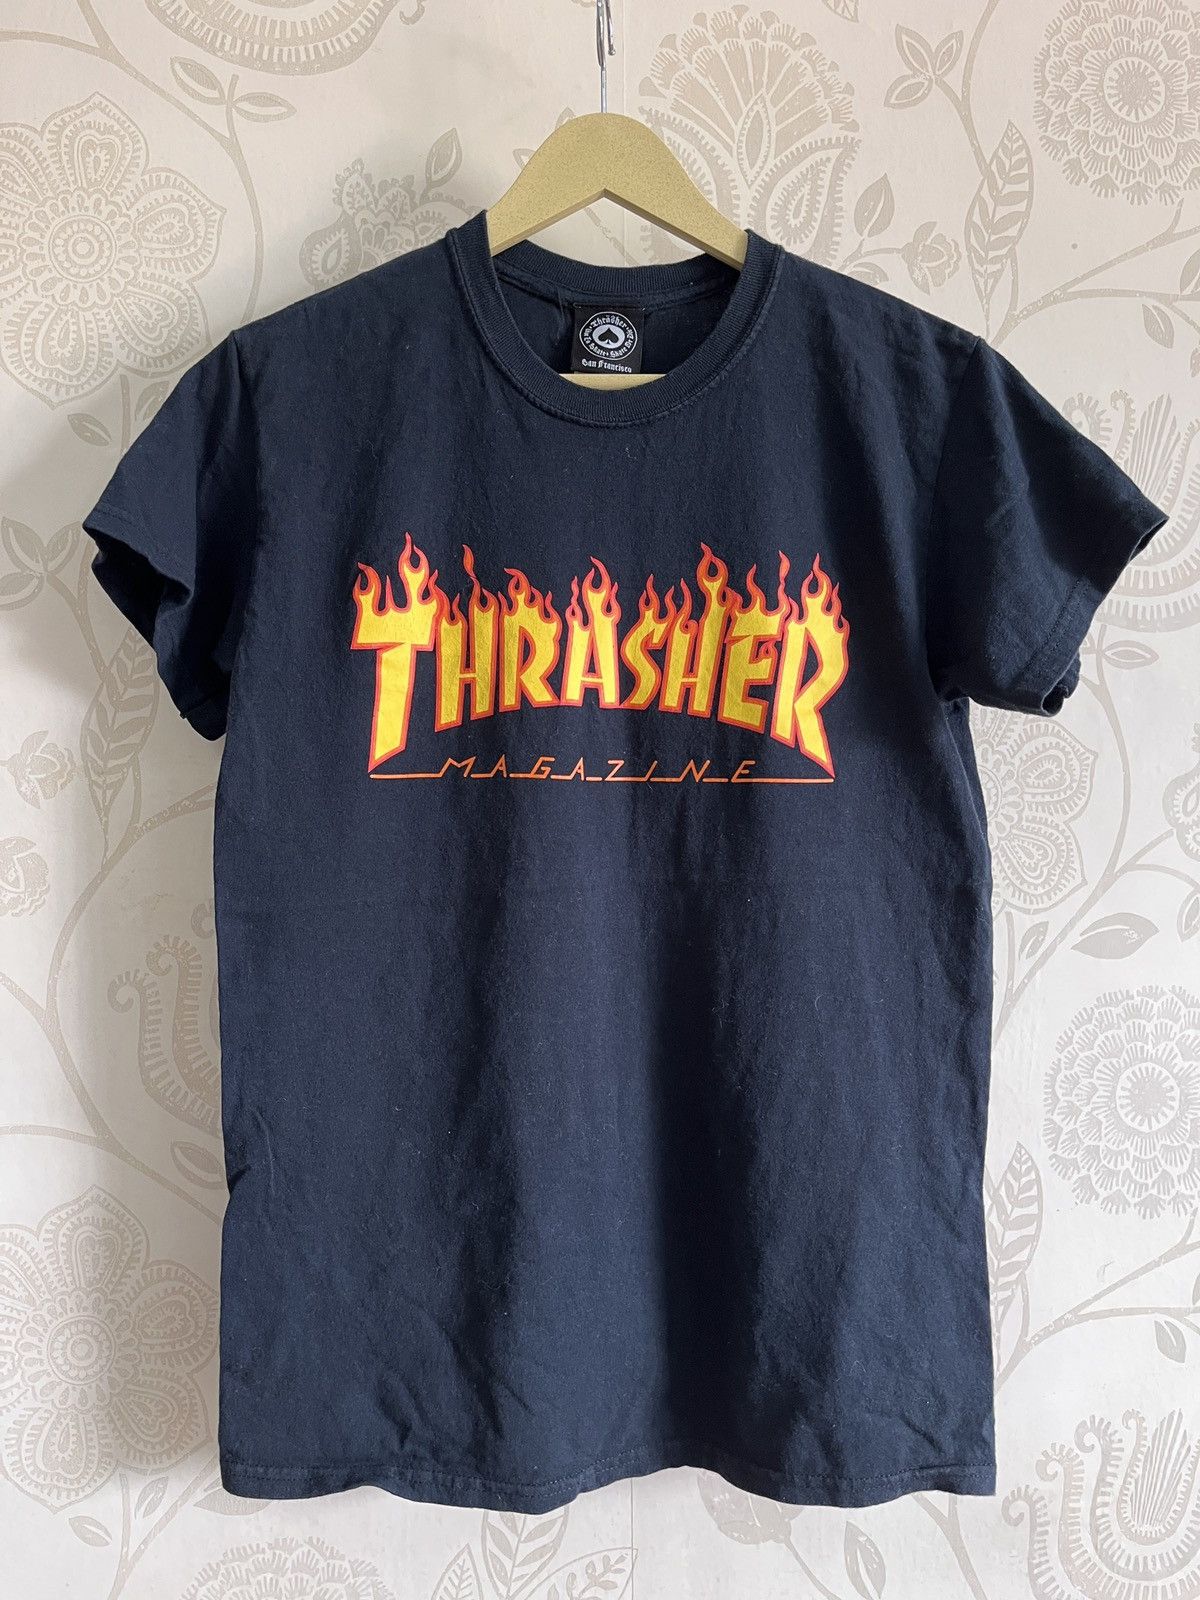 Thrasher Magazine T-Shirt Vintage Year 2000s - 1